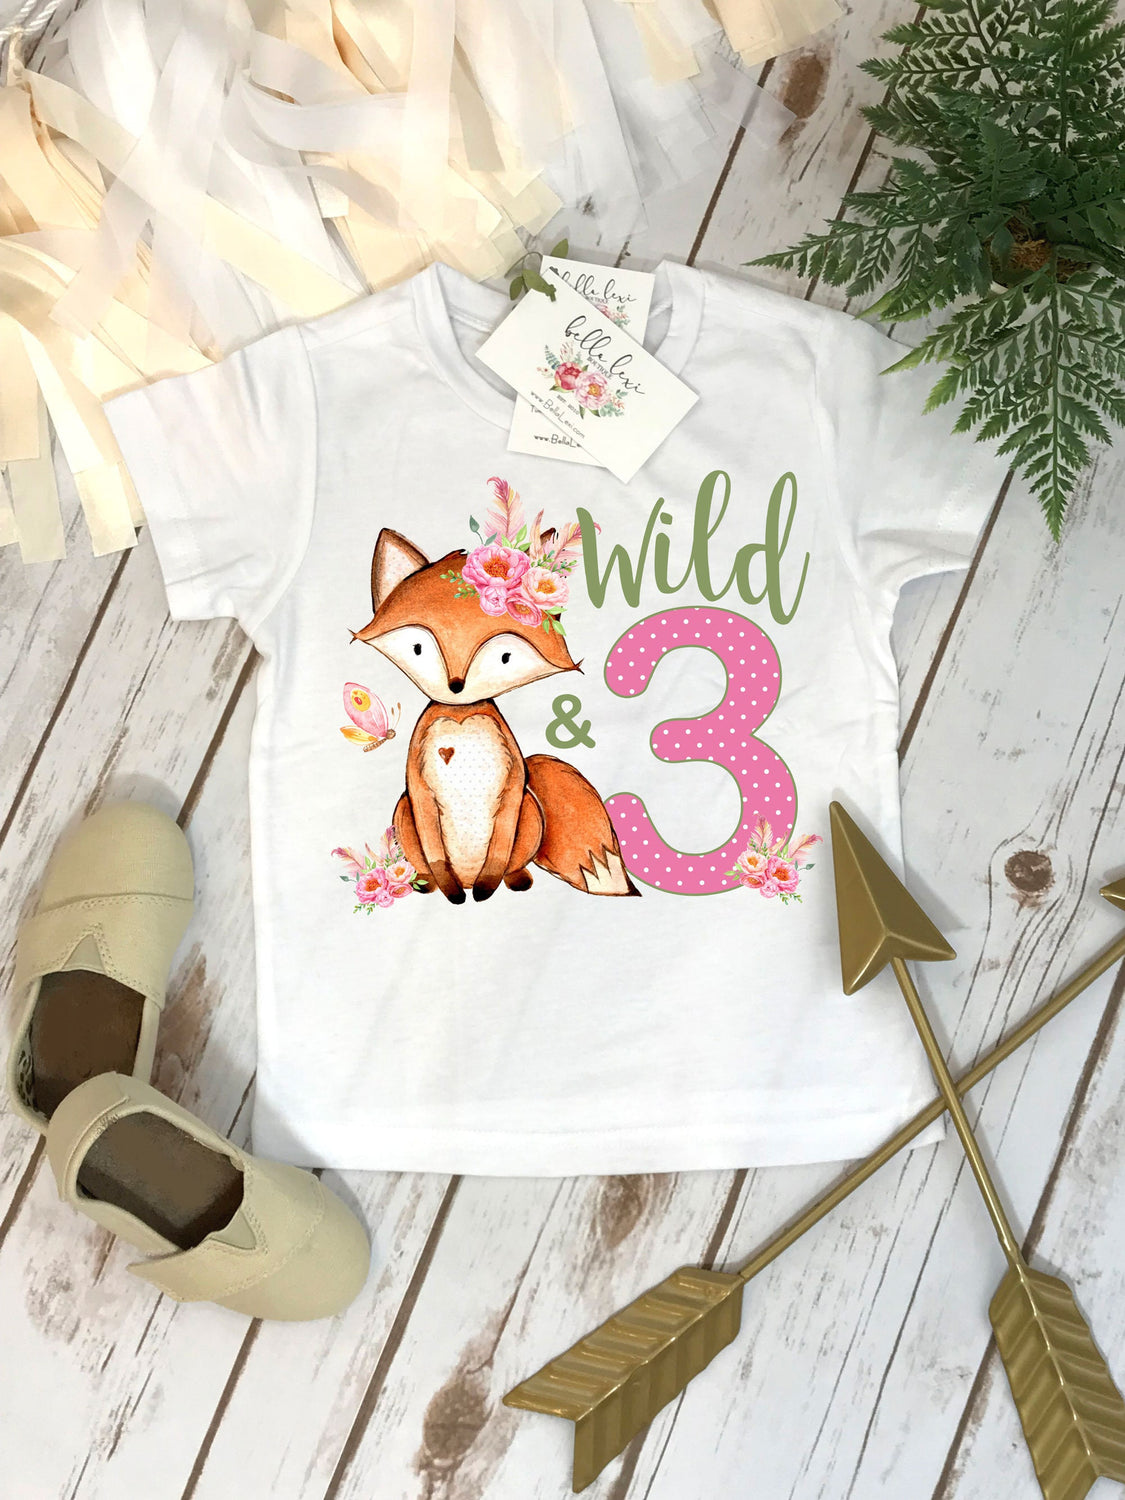 3rd Birthday Shirt, Fox Birthday Shirt, Wild and Three Birthday, Safari Party, Zoo Party, Animal Party, I am 3, Zoo Birthday, Wild and 3